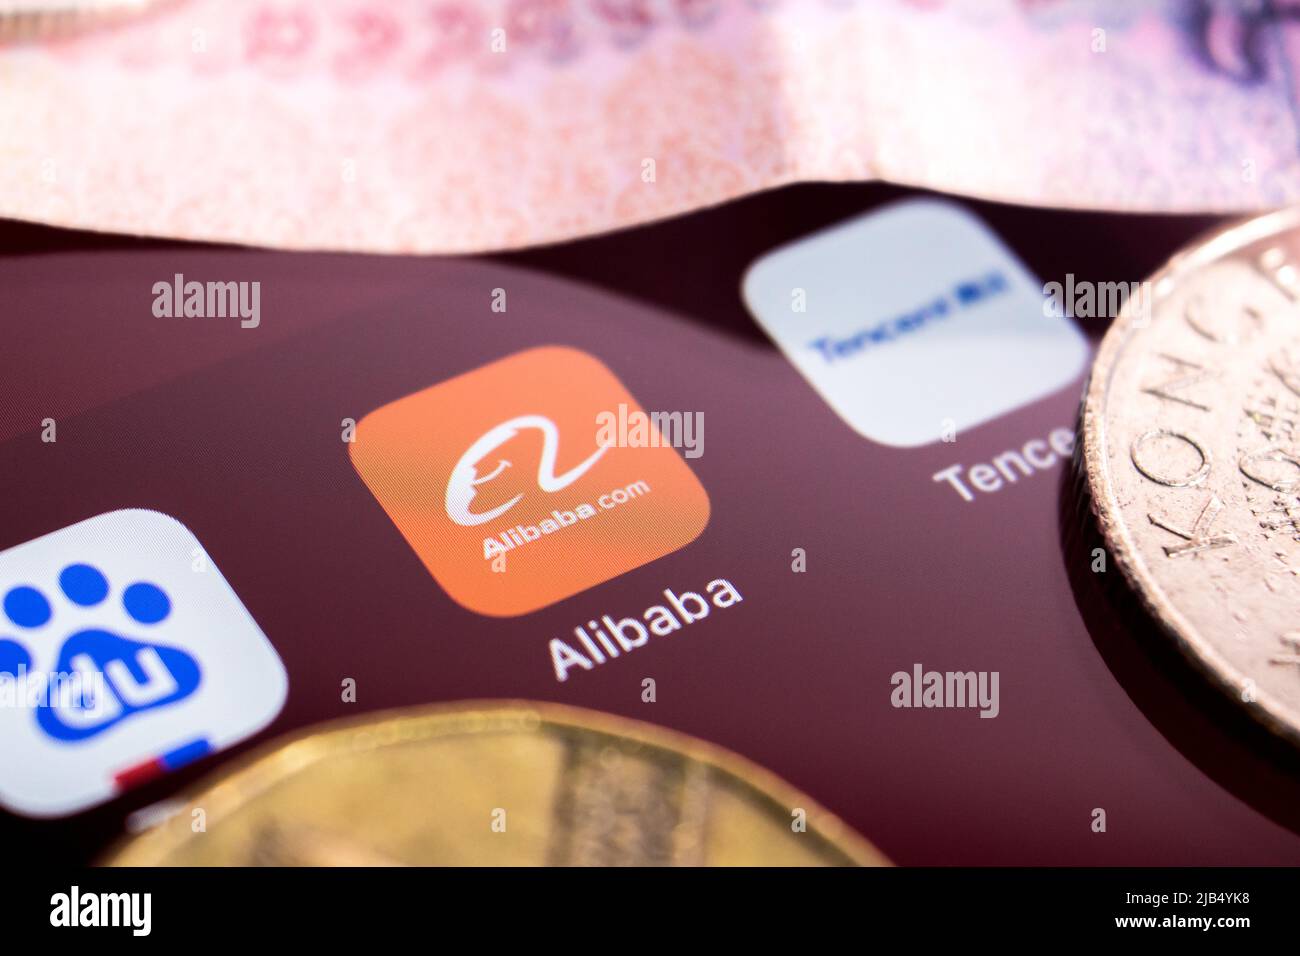 Alibaba logo, founded on 4 April 1999 in Hangzhou, Zhejiang, with Chinese big tech company logos (Baidu, Tencent and Huawei) & money on an iPhone. Stock Photo